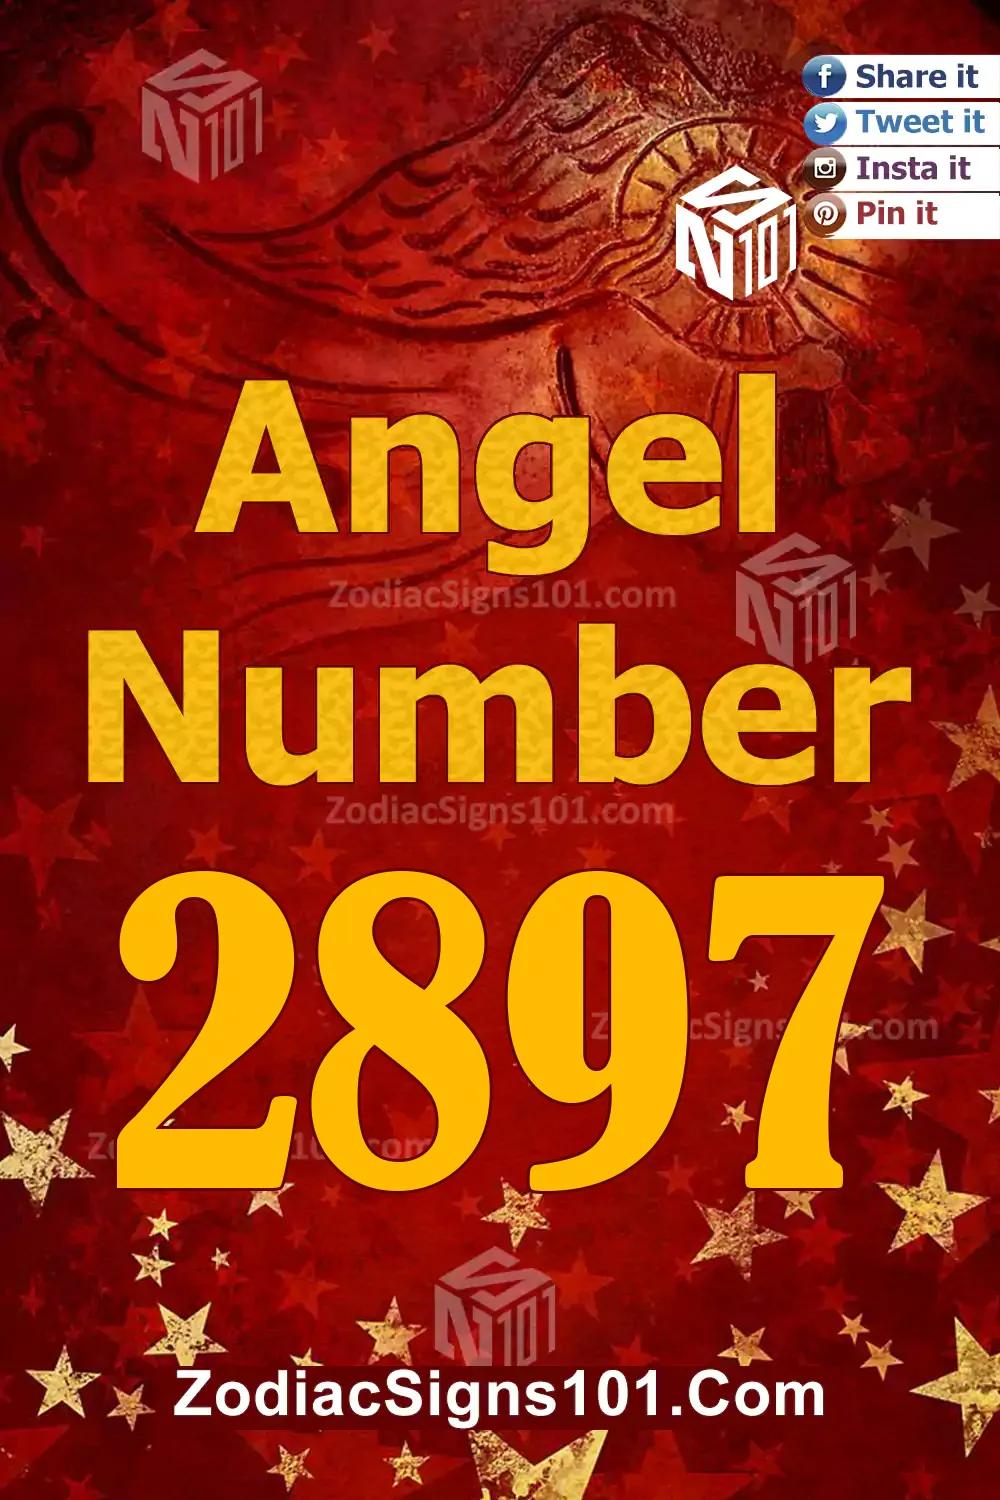 2897-Angel-Number-Meaning.jpg